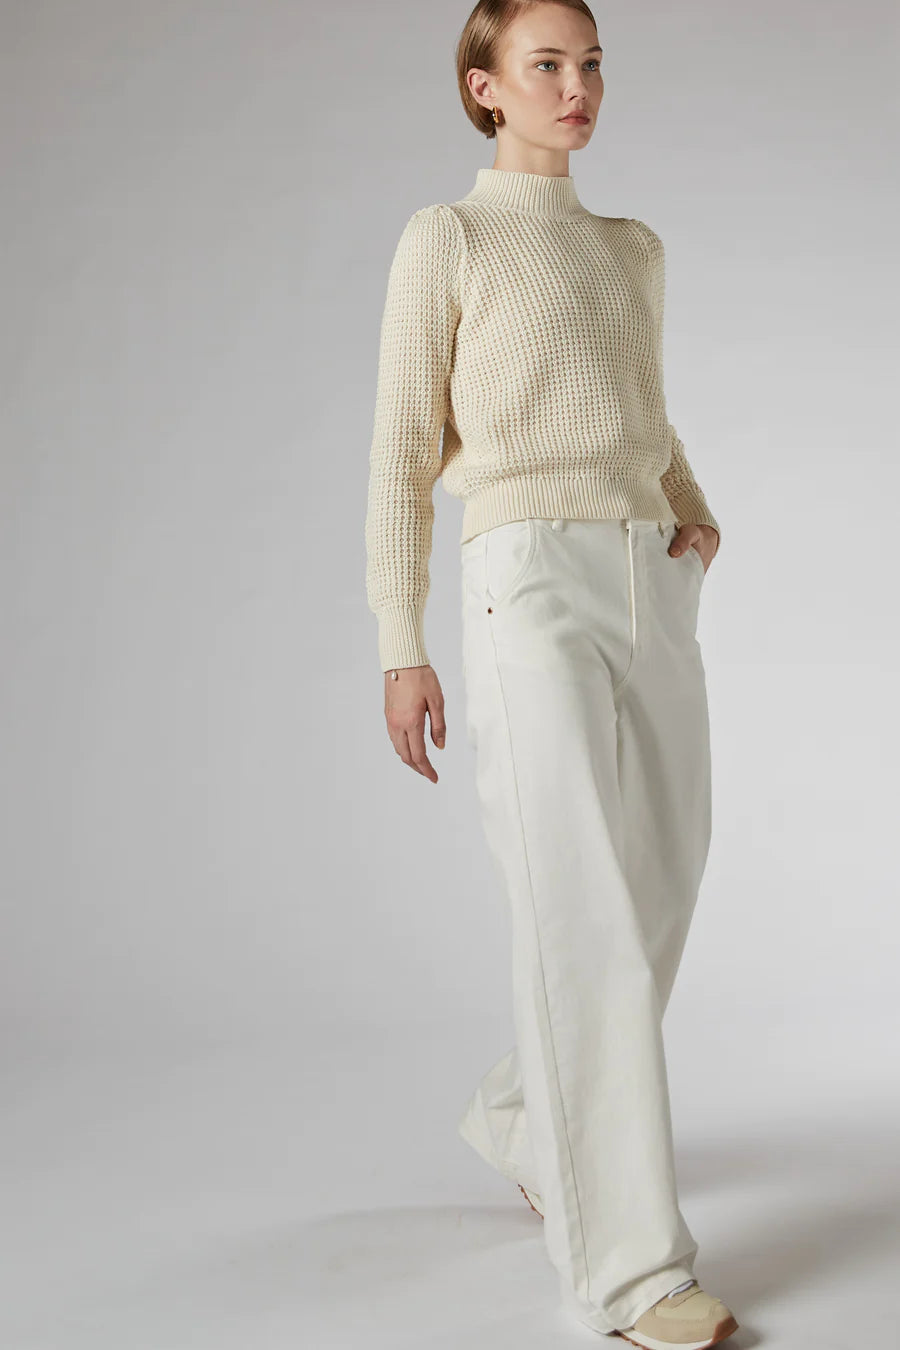 Dricoper | Hildy Ivory Cotton Sweater-Suzie Anderson Home